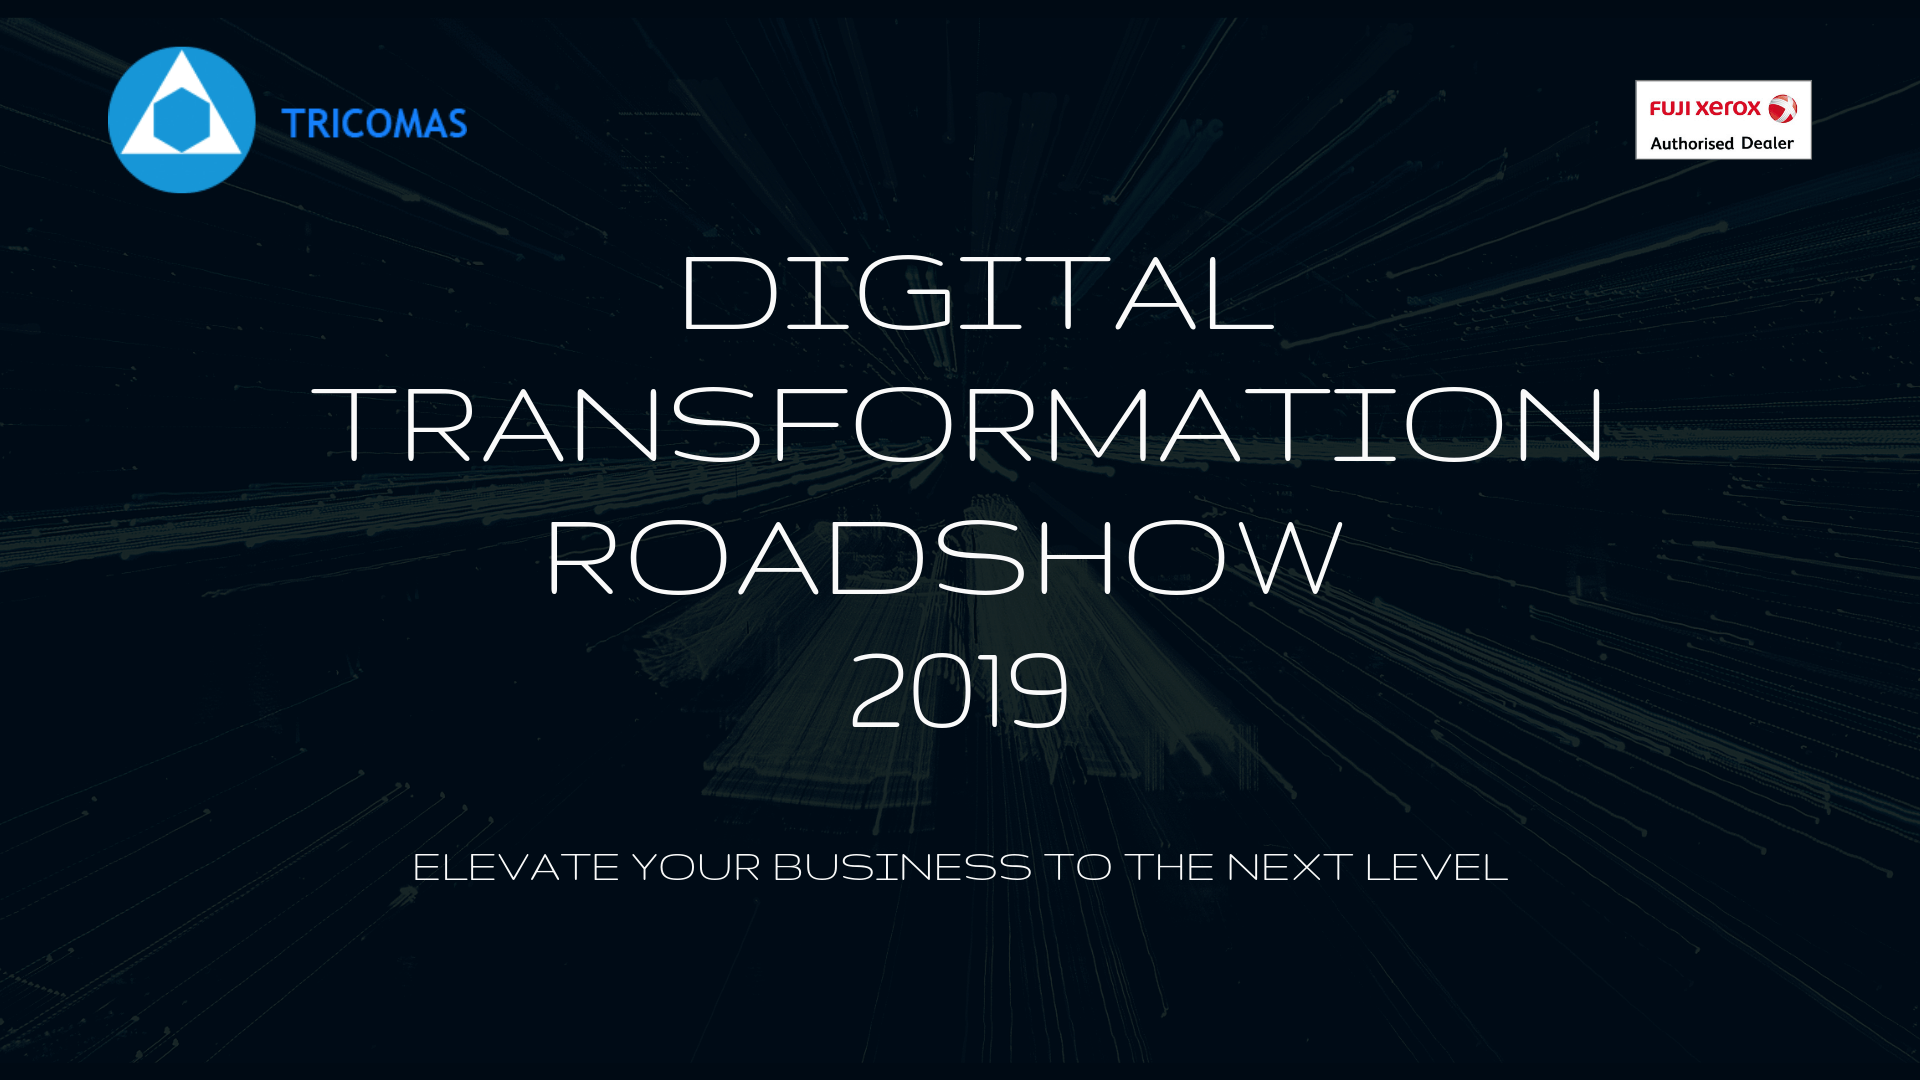 Ipoh Digital Transformation Roadshow 2019 – Tricomas Marketing